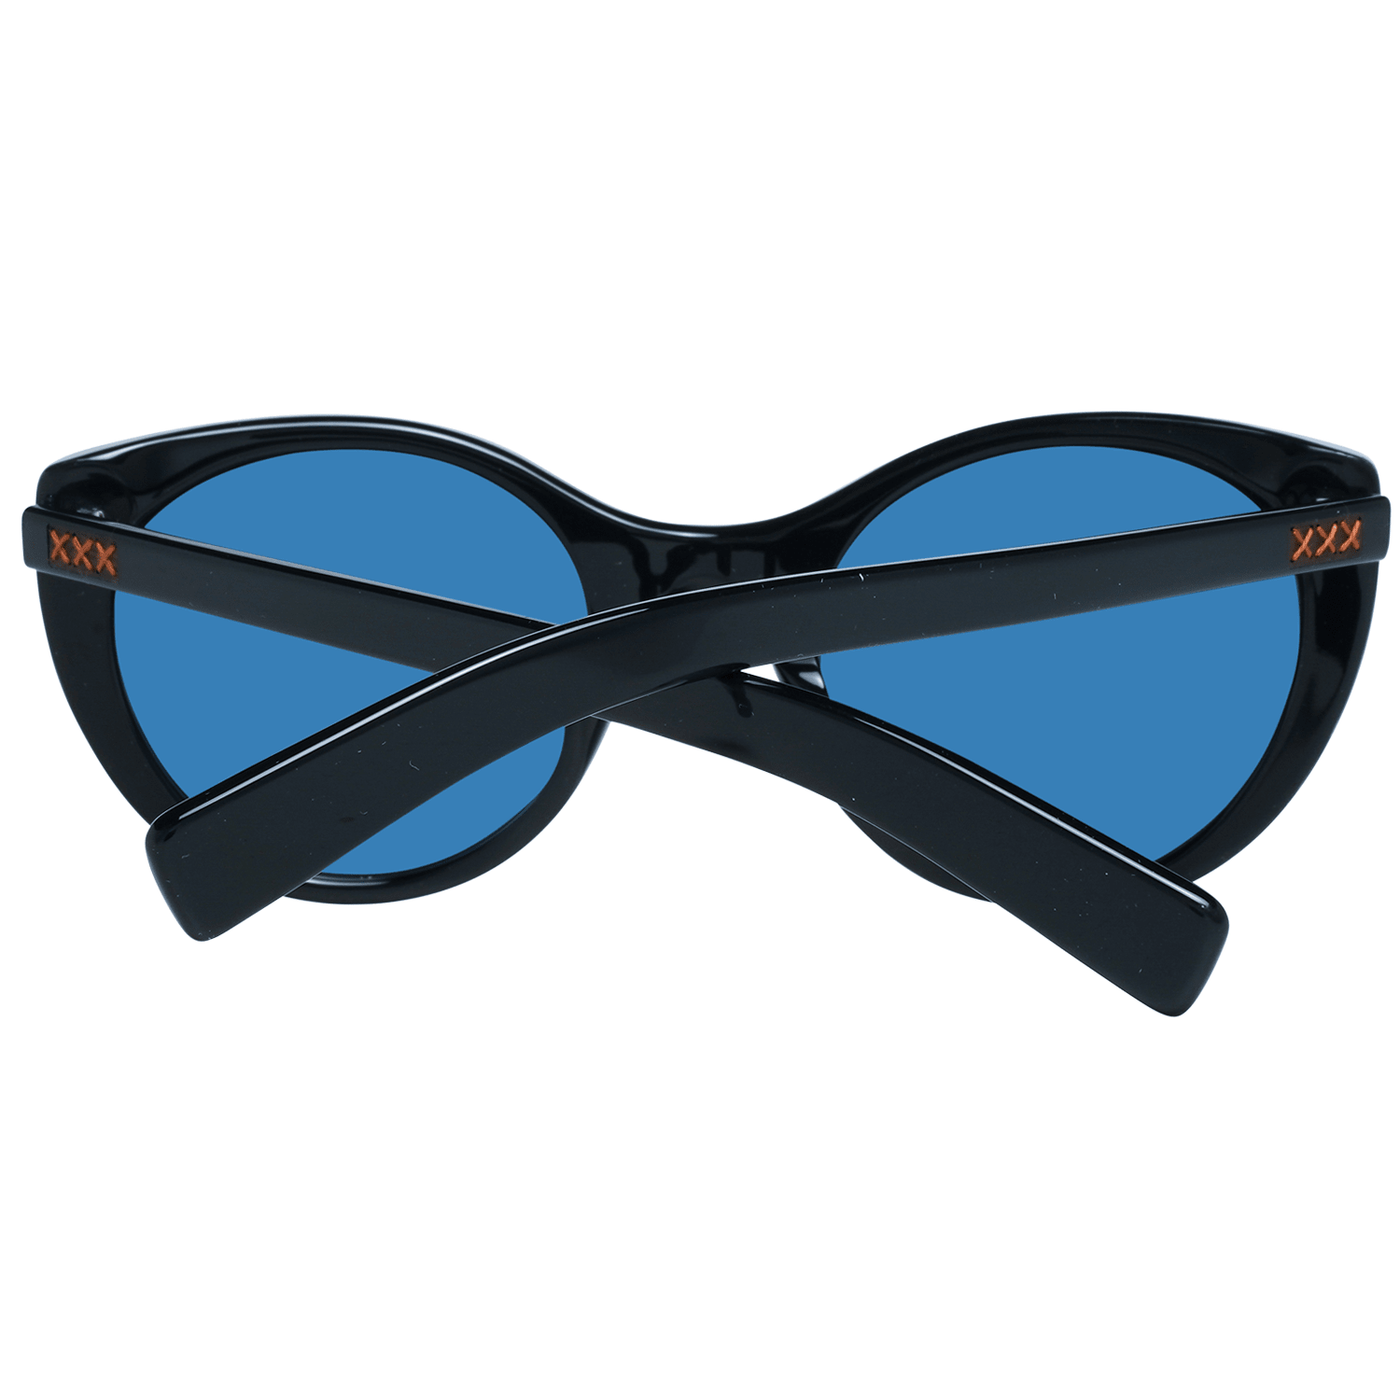 Zegna Couture Black Unisex Sunglasses